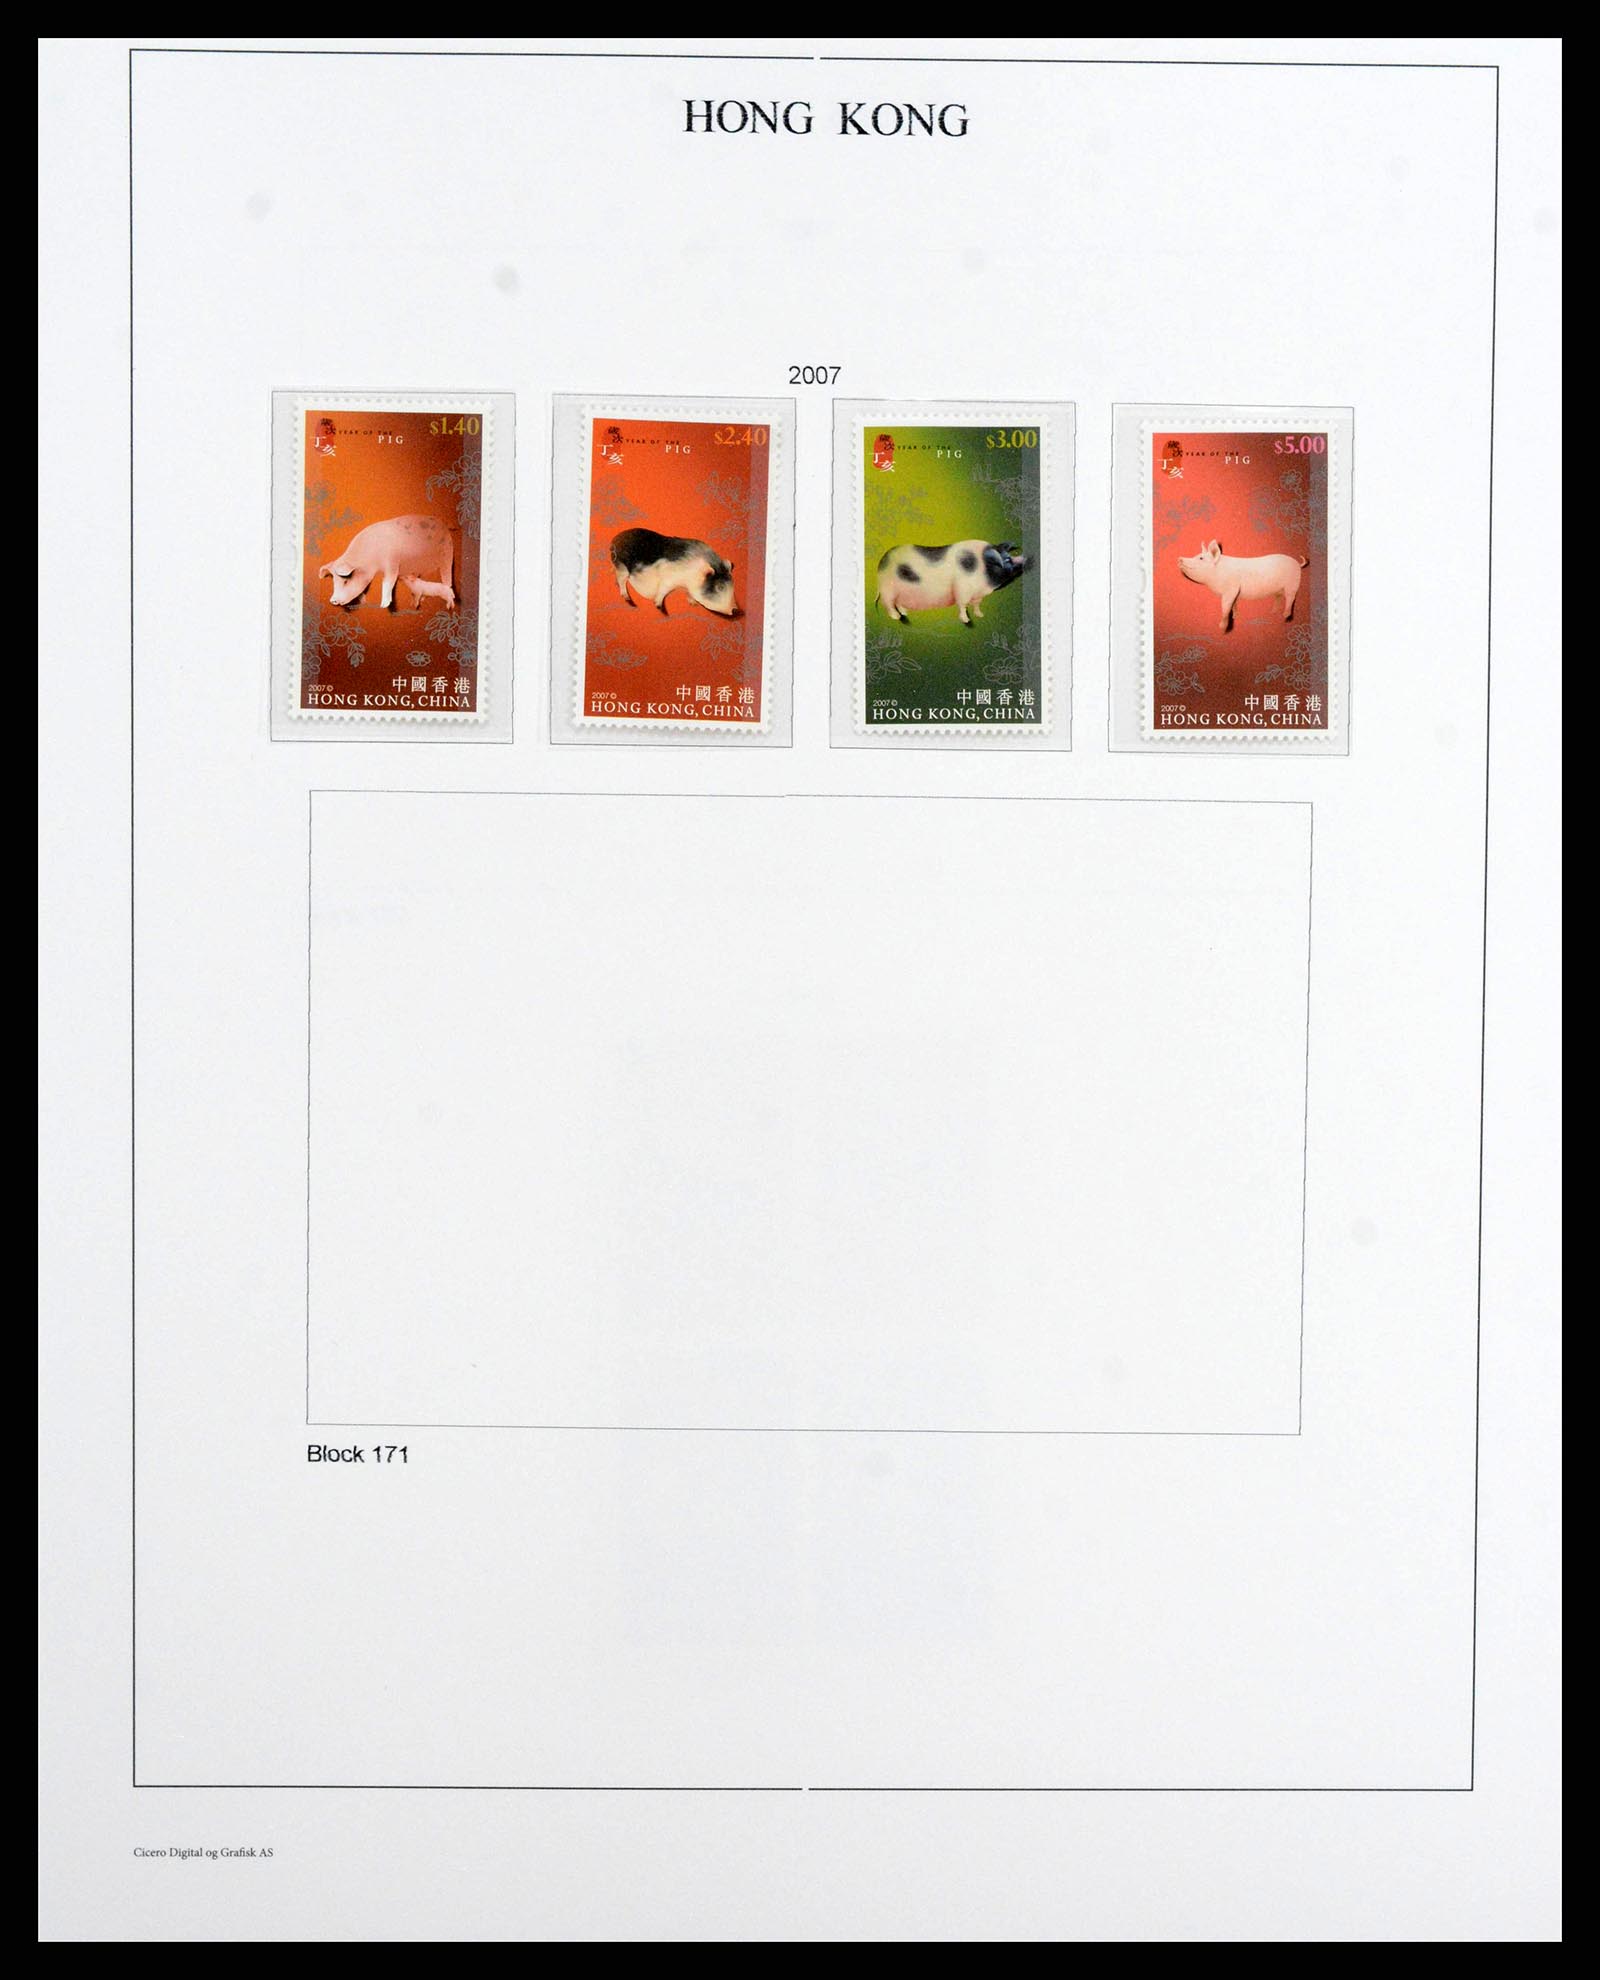 37955 0266 - Stamp collection 37955 Hong Kong supercollection 1862-2007.